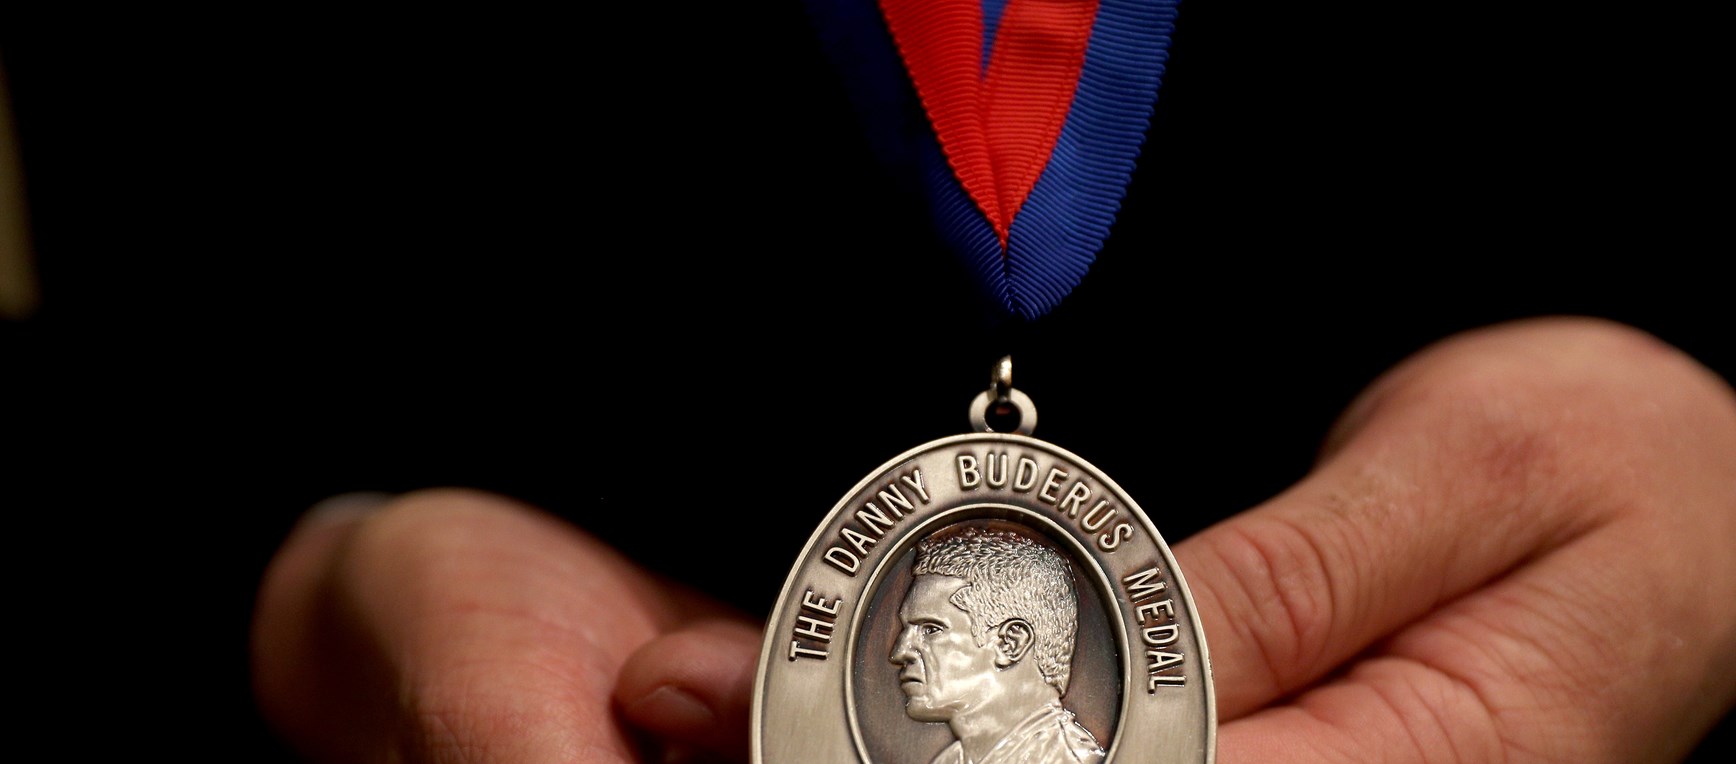 GALLERY: Danny Buderus Medal 2019